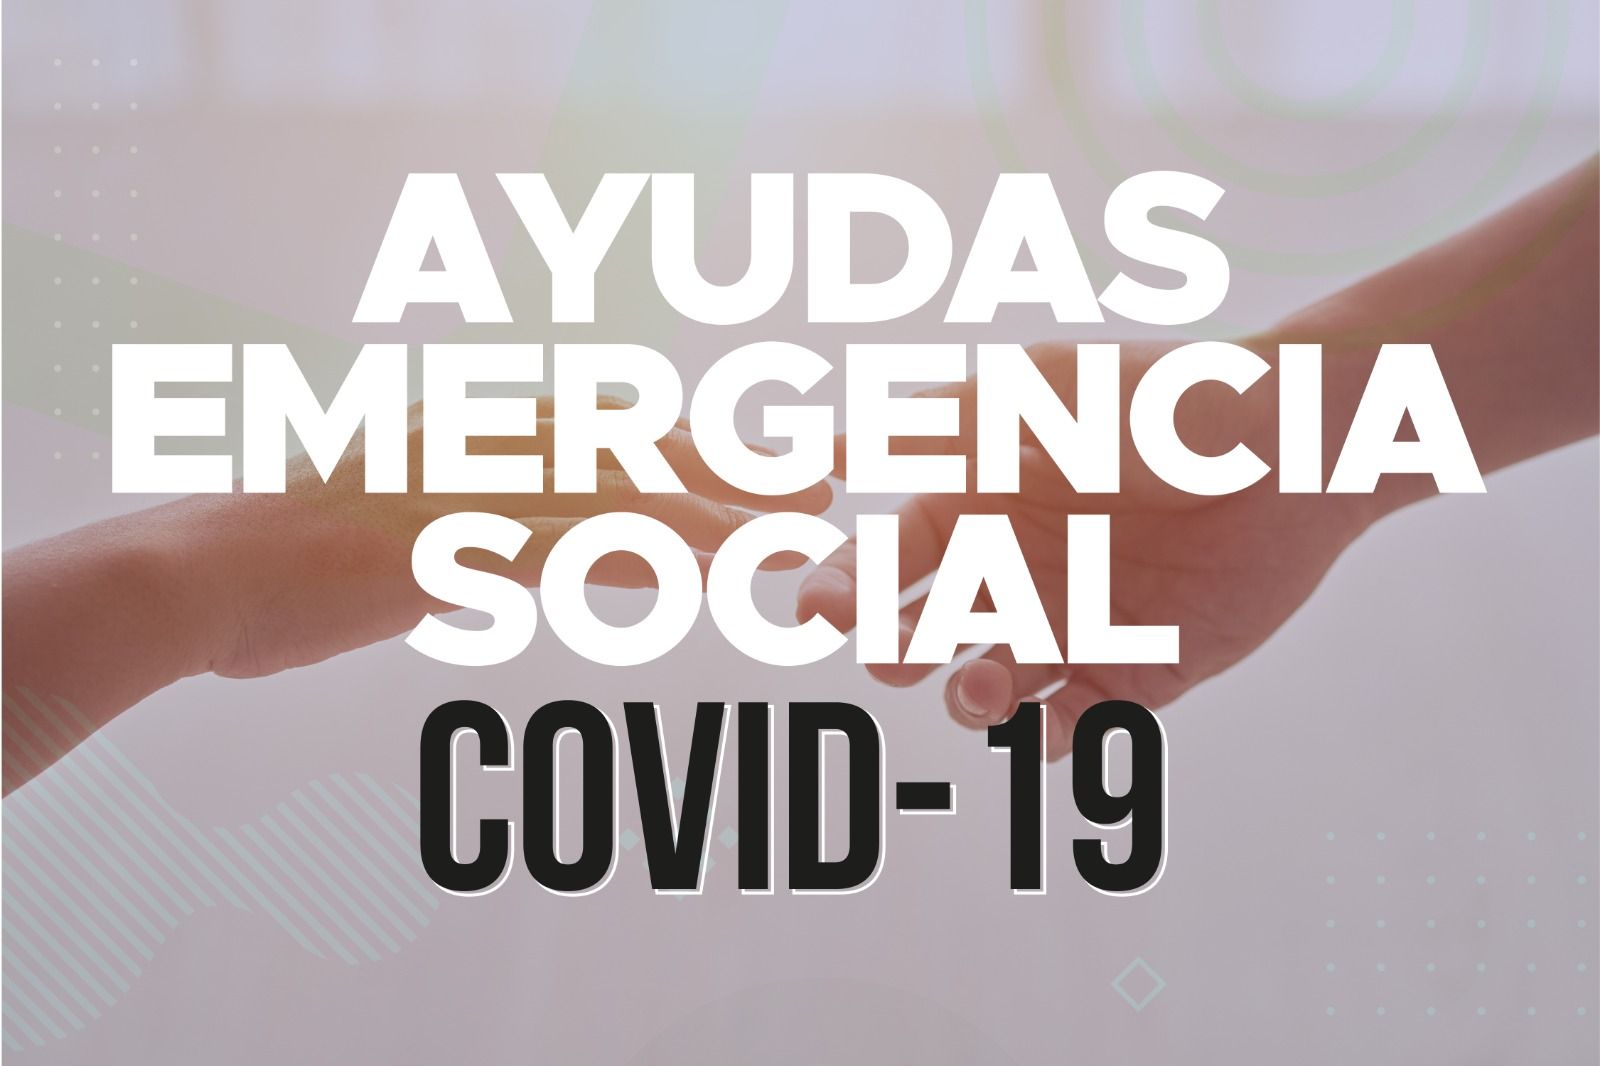 Ayudas Emergencia Social COVID19